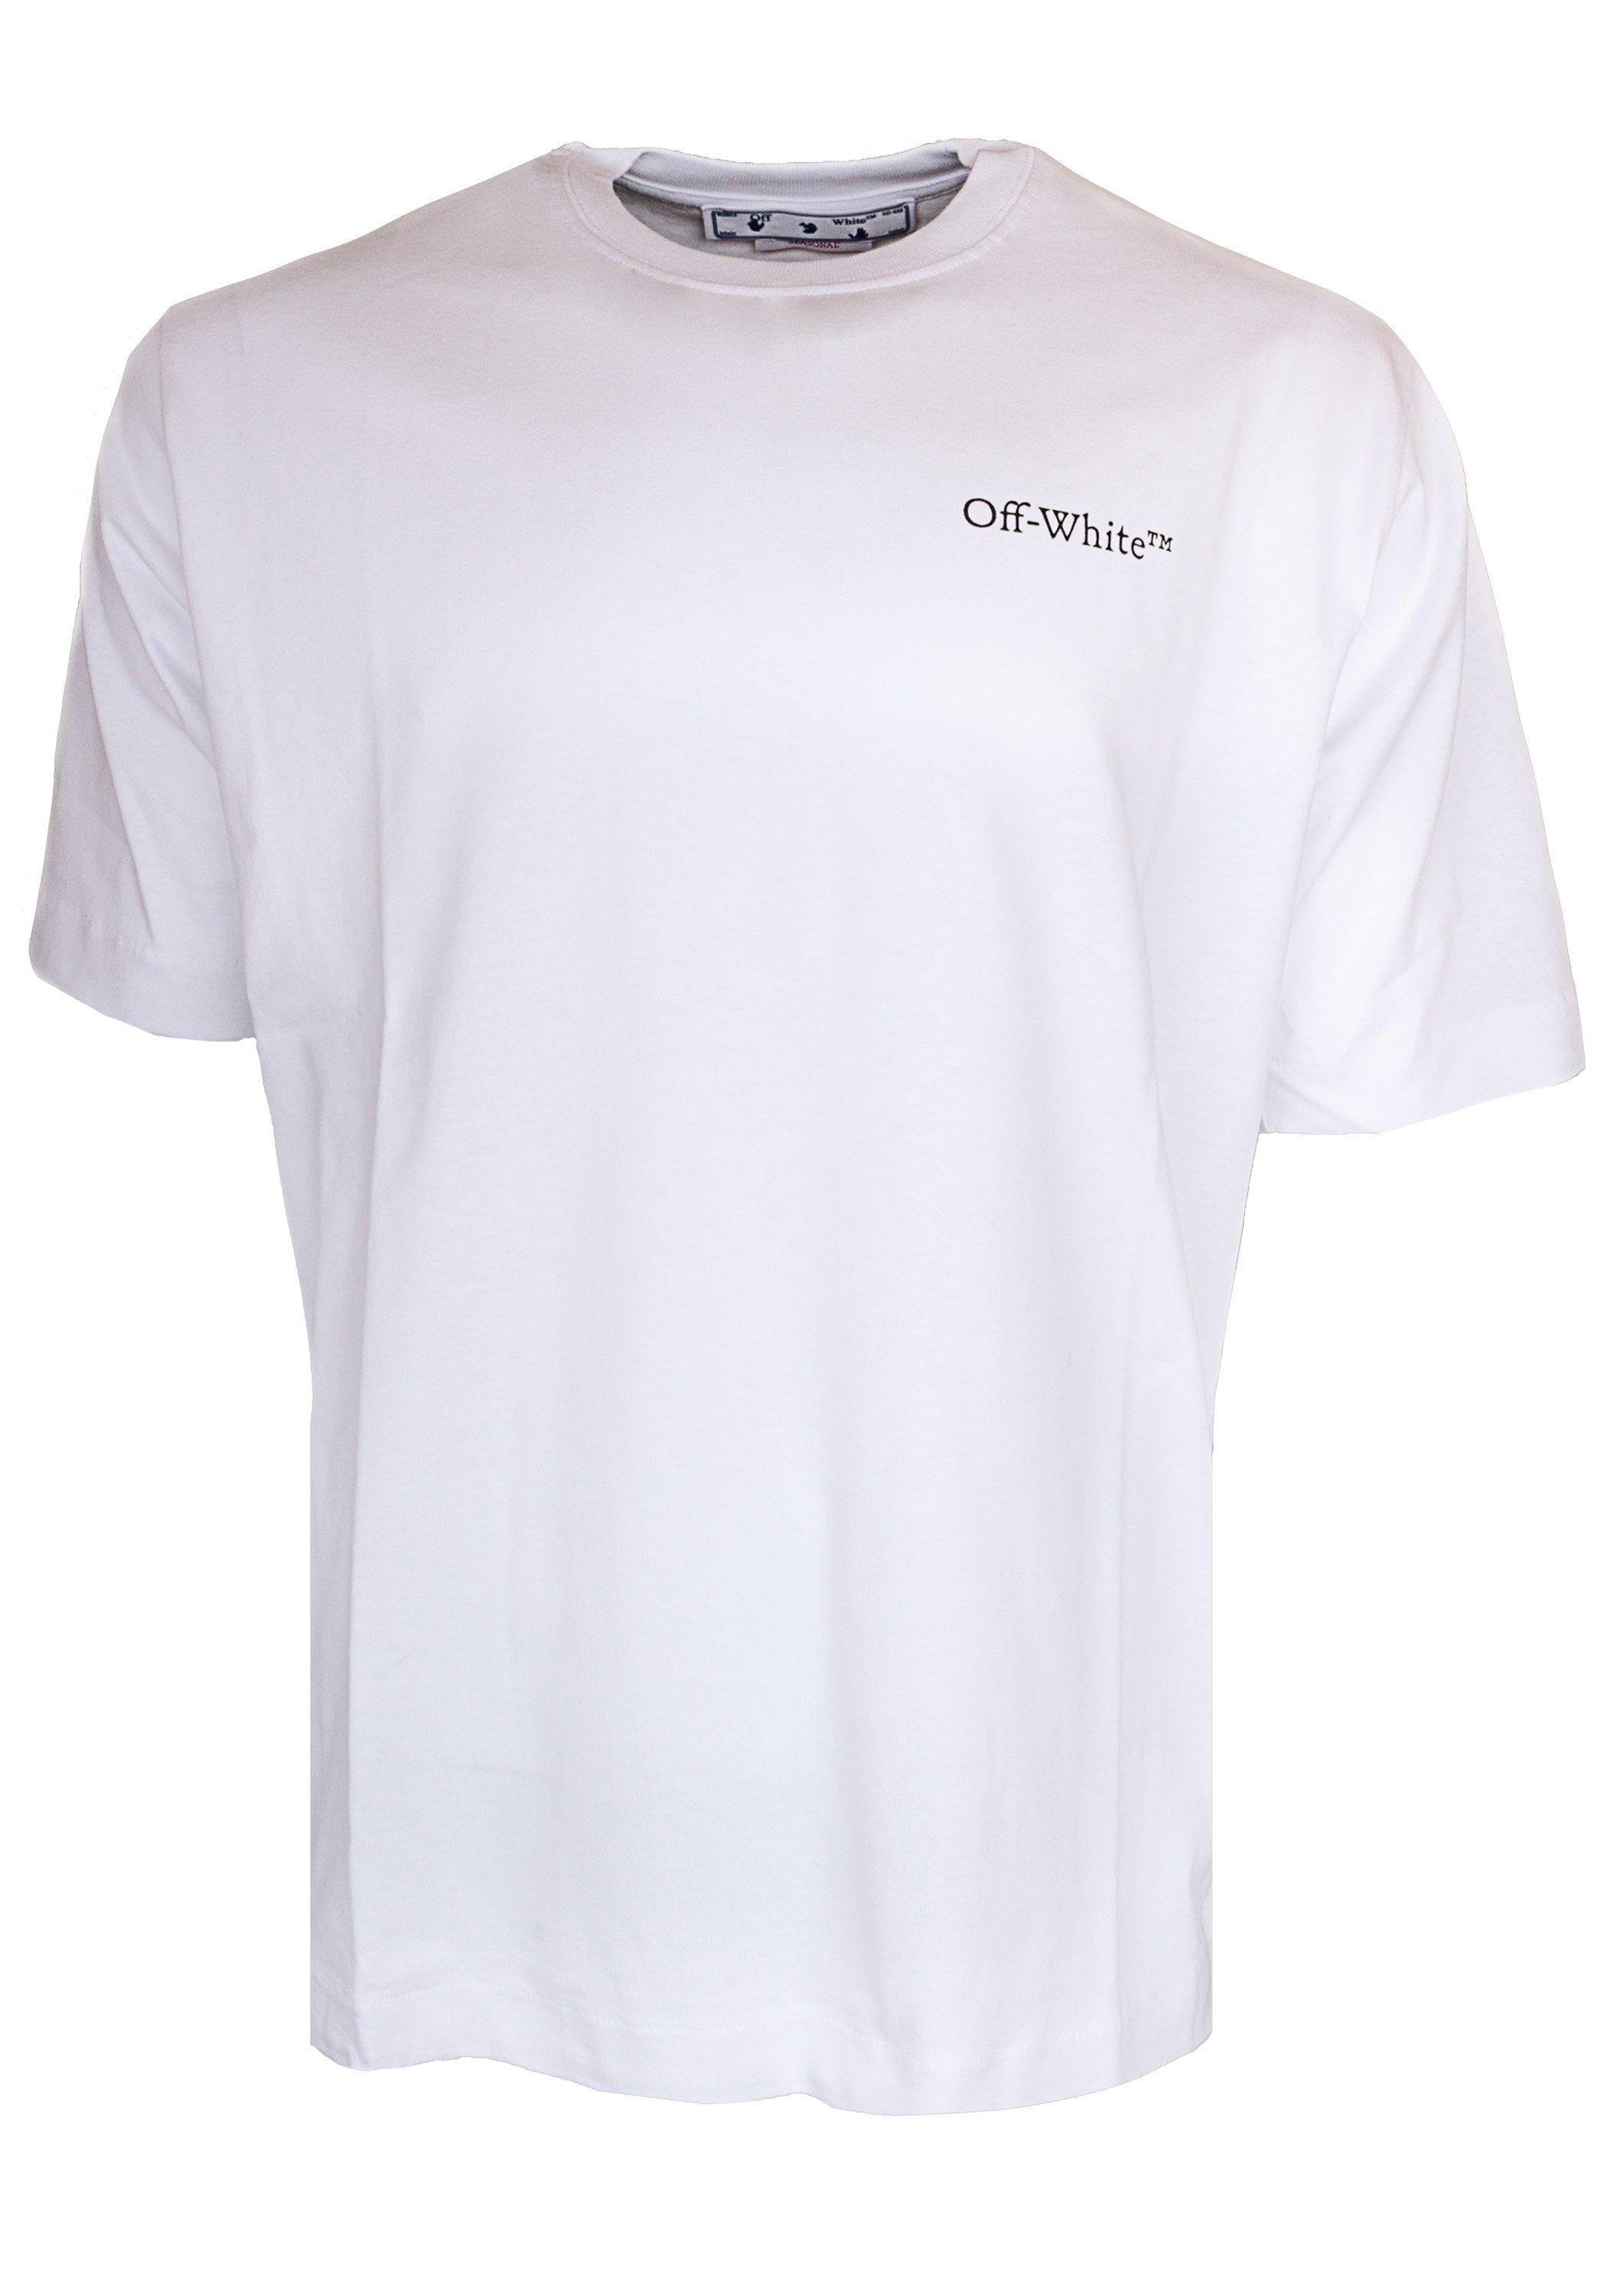 OFF-WHITE T-Shirt Off White Herren Shirt Caravaggio T-Shirt Crowning